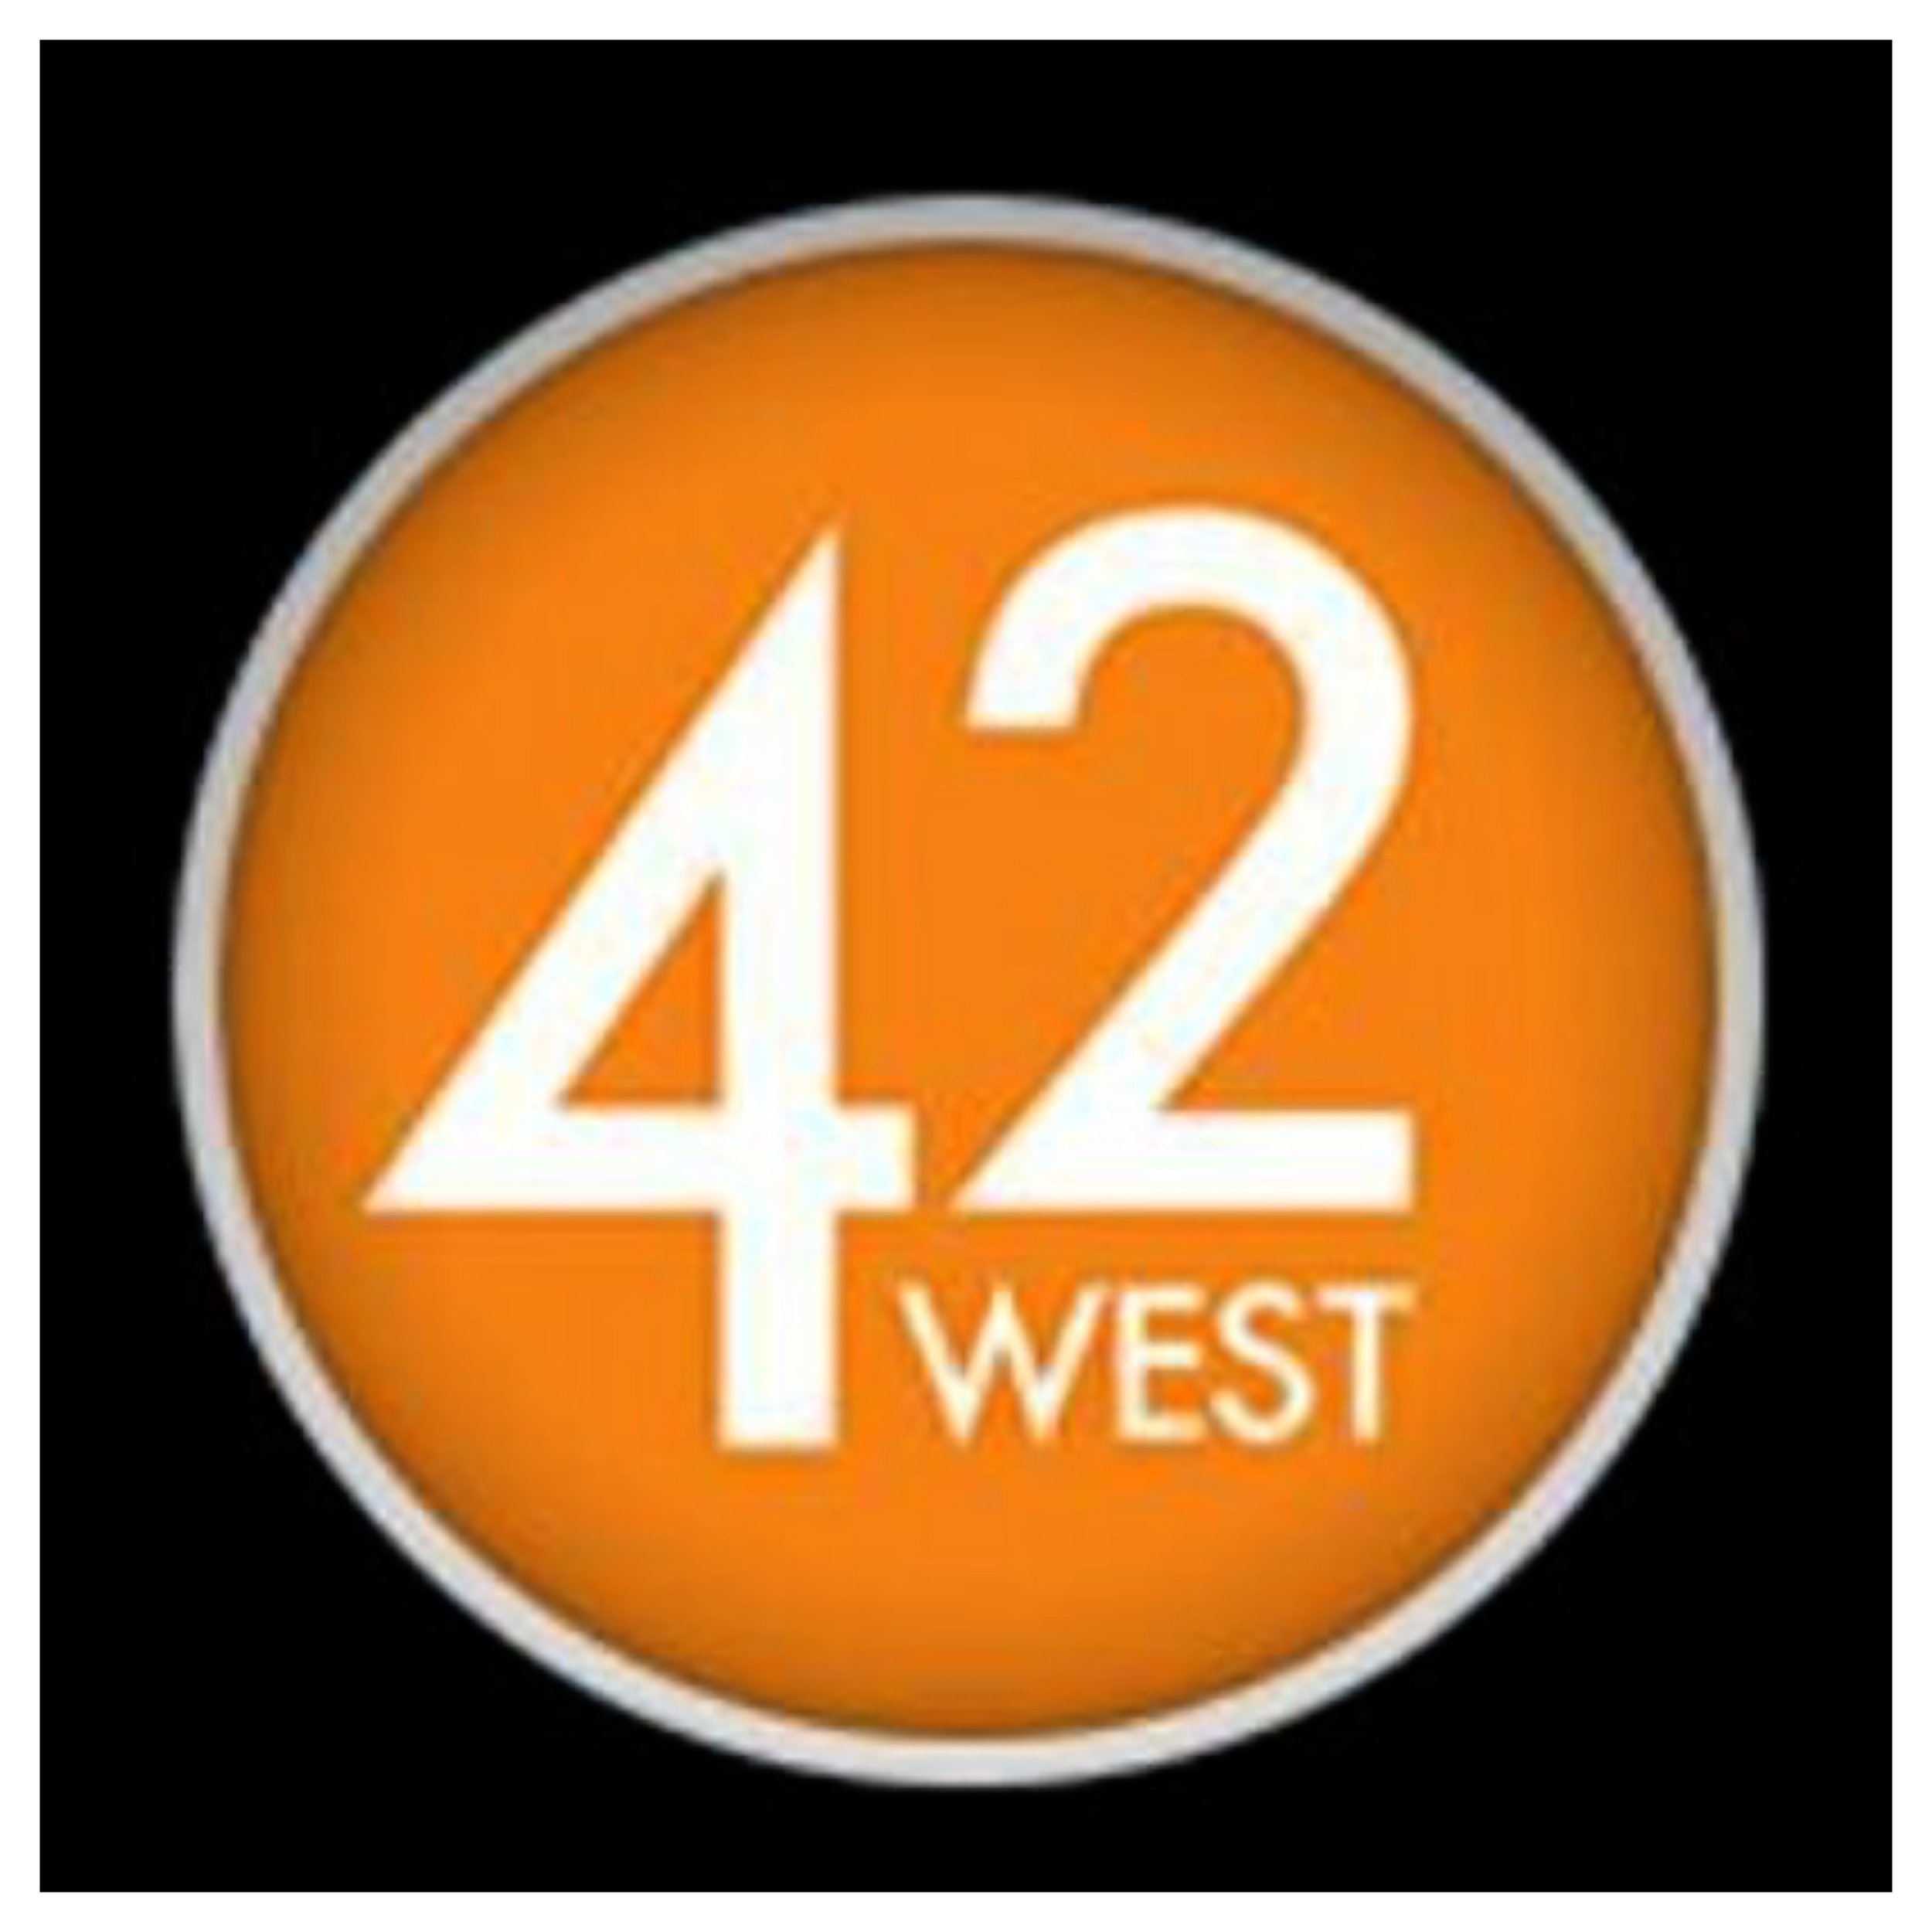 42West Logo.jpg